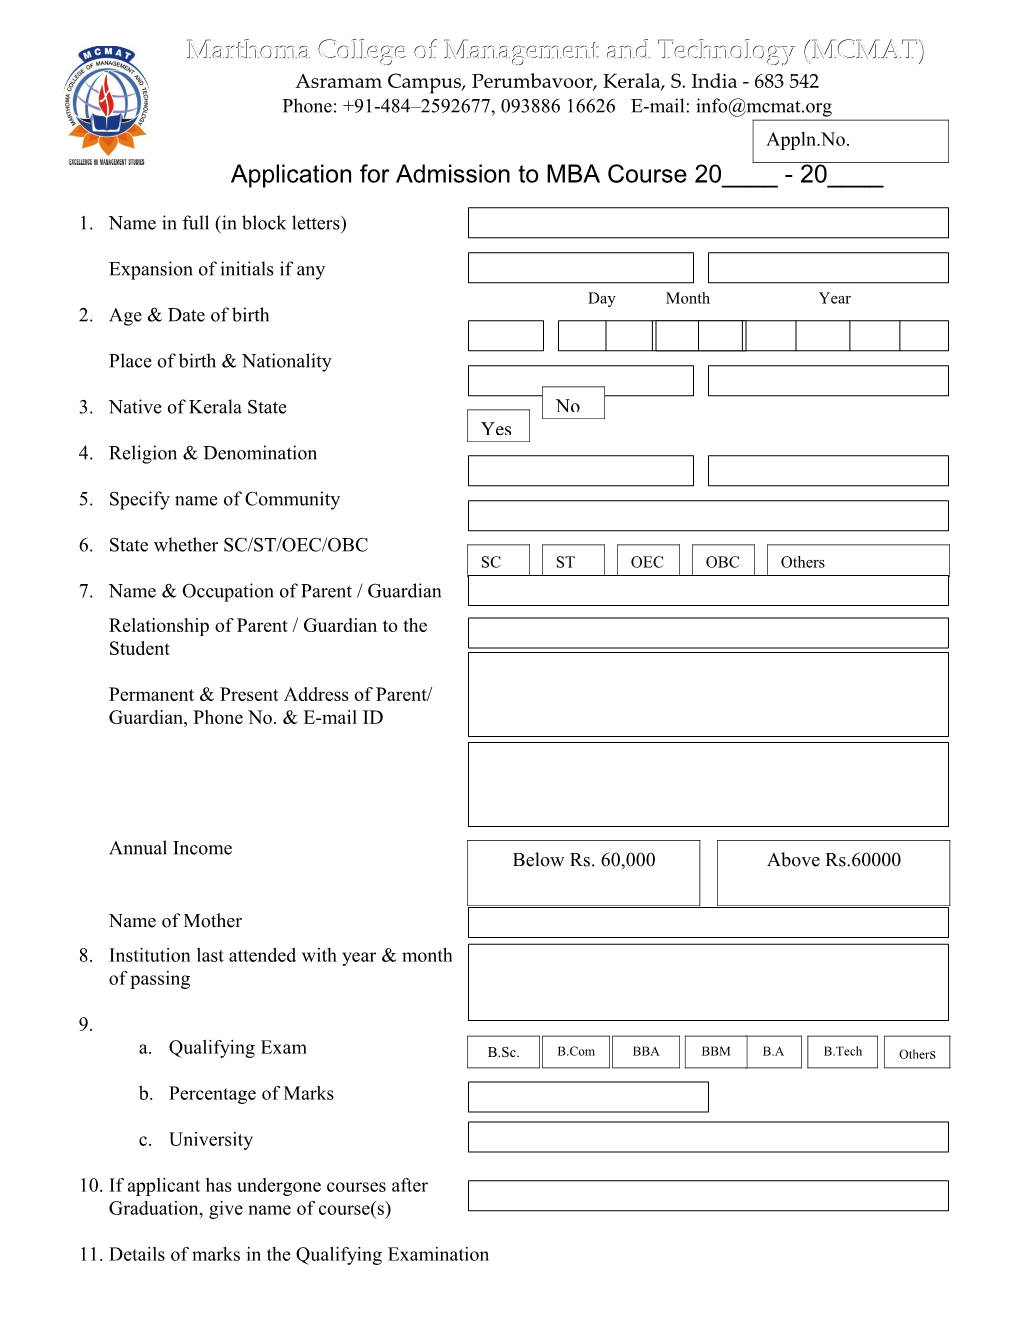 MCMAT Application Form